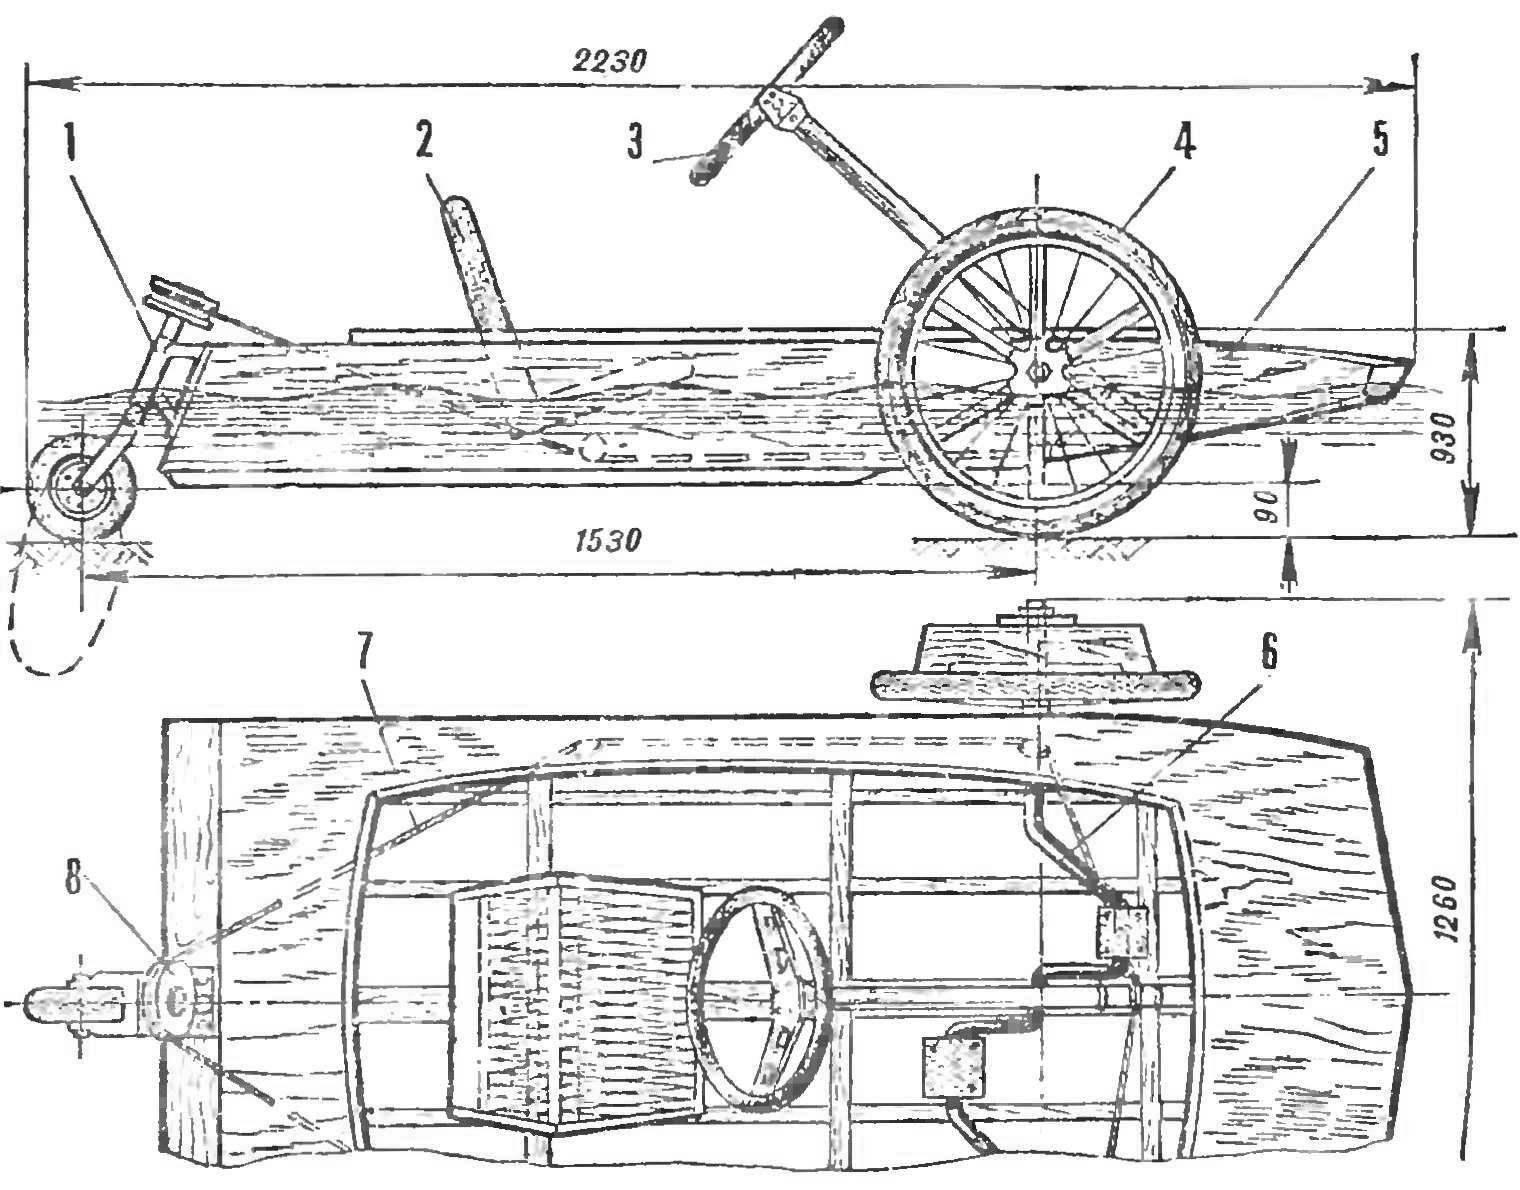 Fig. 1. Three-wheeled amphibian